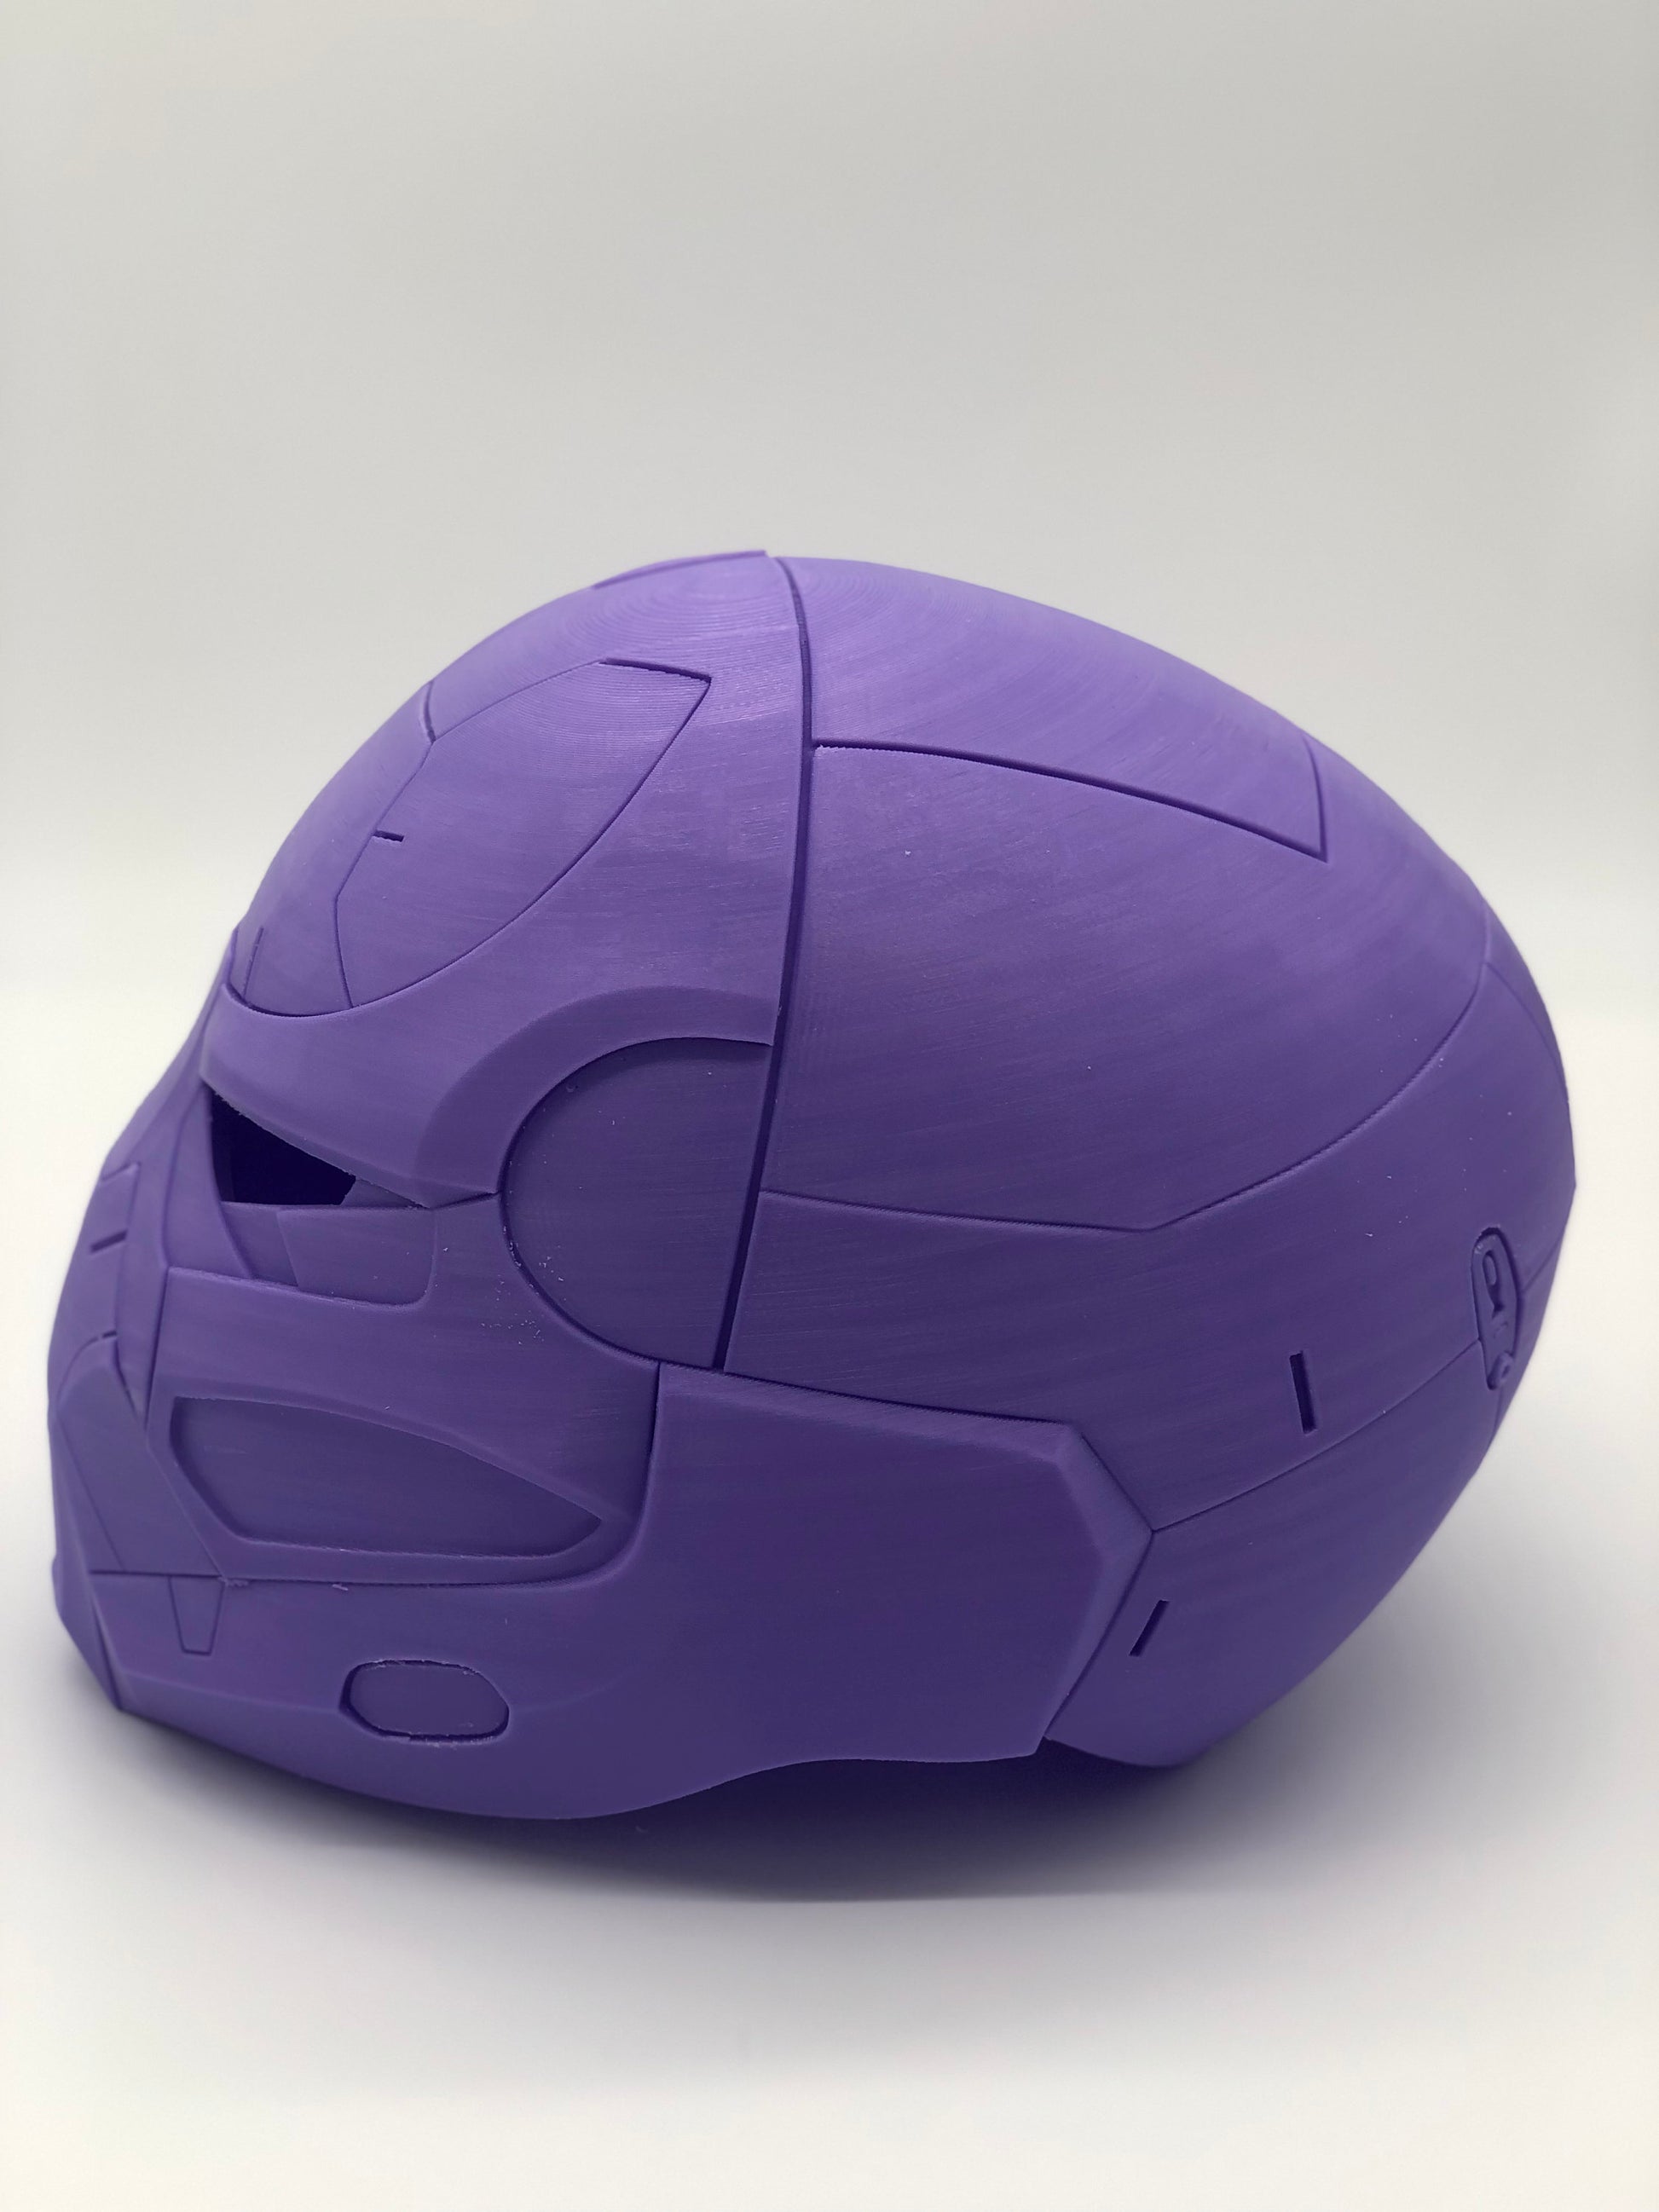 Prowler helmet wearable from Spiderman PS5